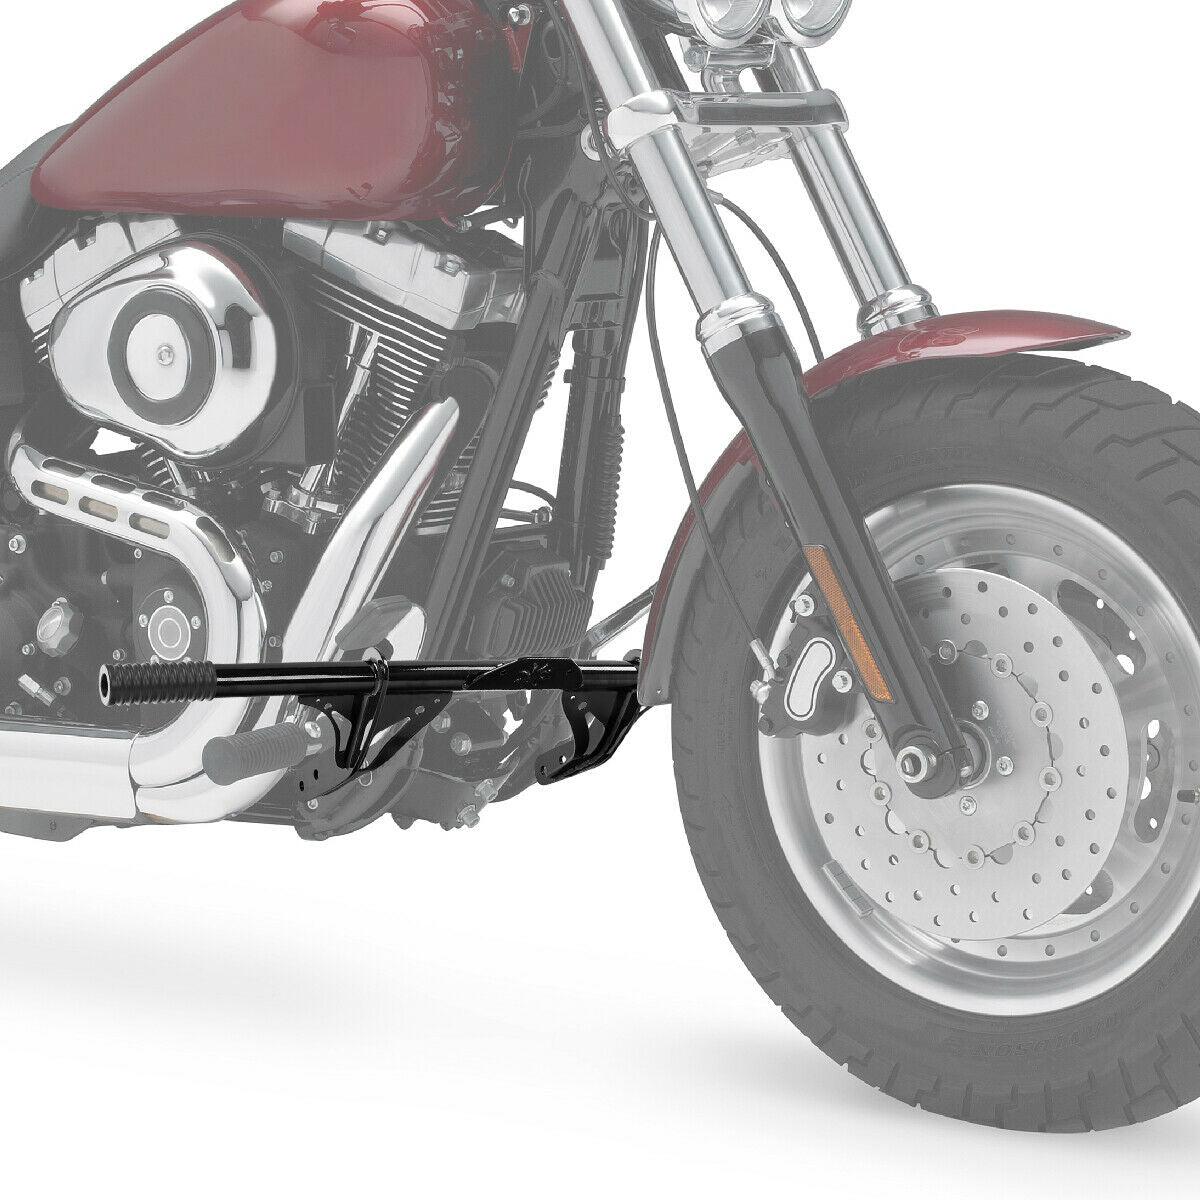 Black Front Crash Bar Protector Fit For Harley Dyna models 2006-2017 2015 2016 - Moto Life Products